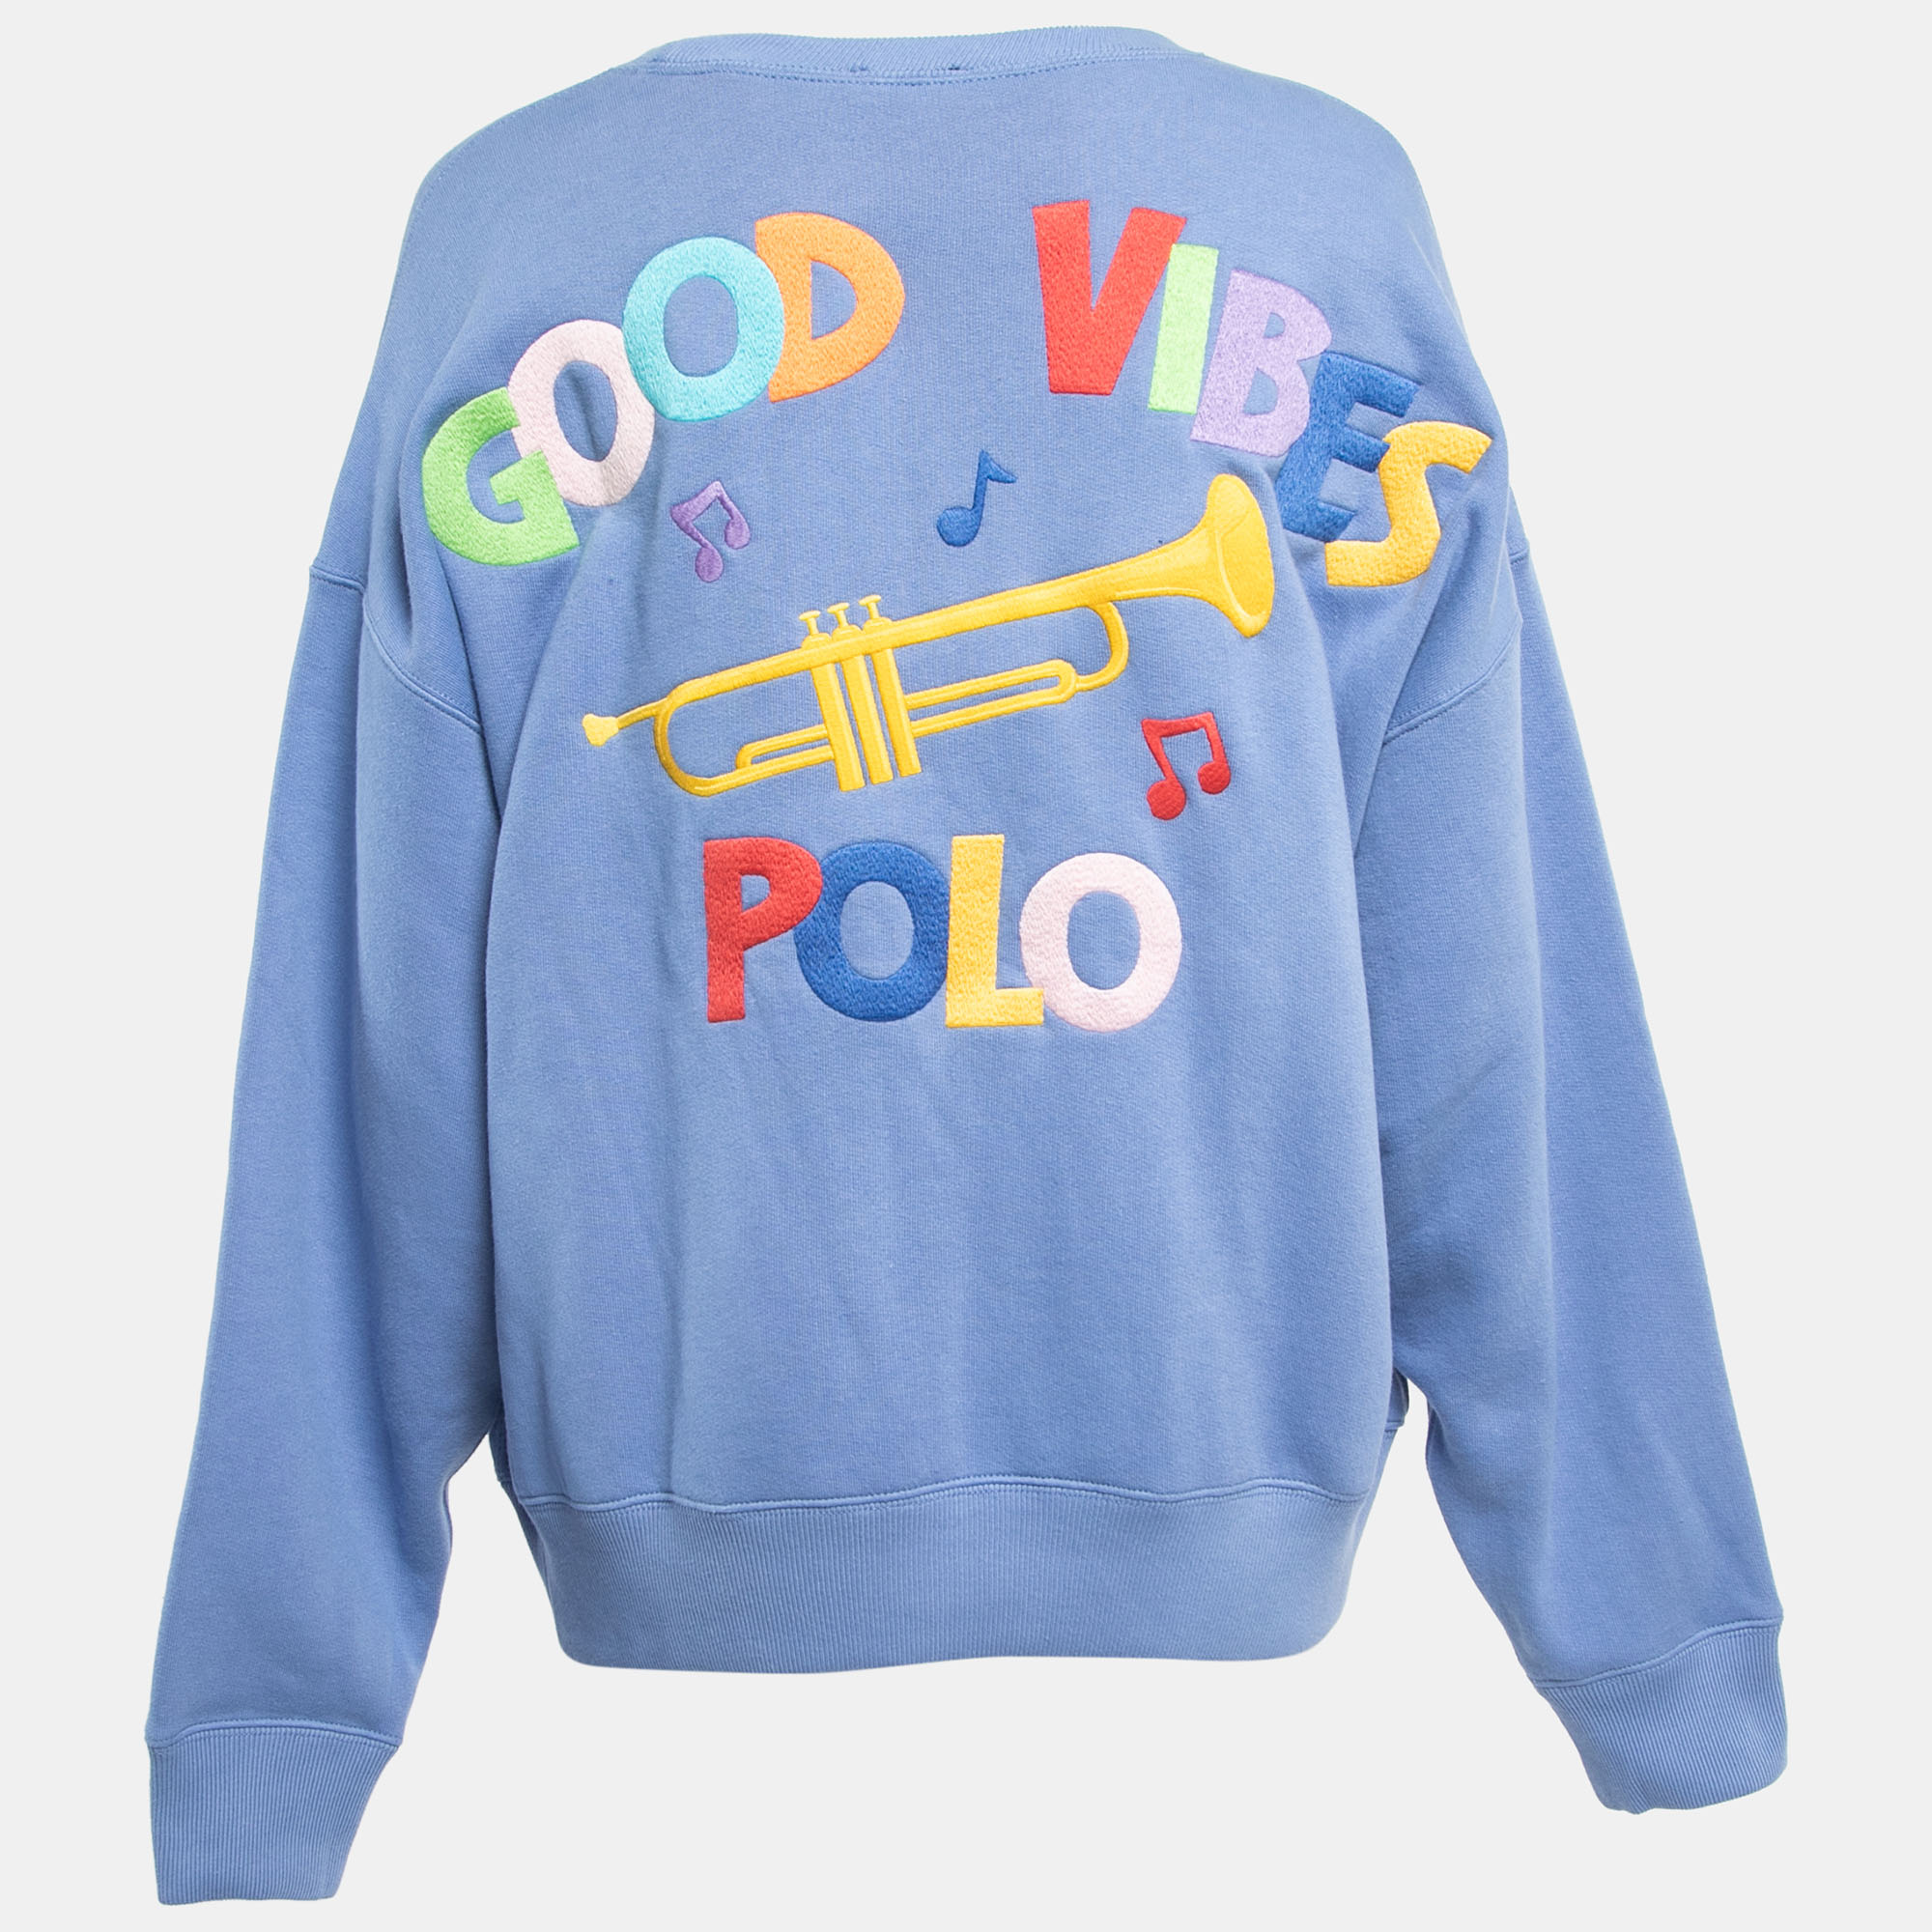 

Polo Ralph Lauren Blue Cotton Good Vibes Embroidered Sweatshirt